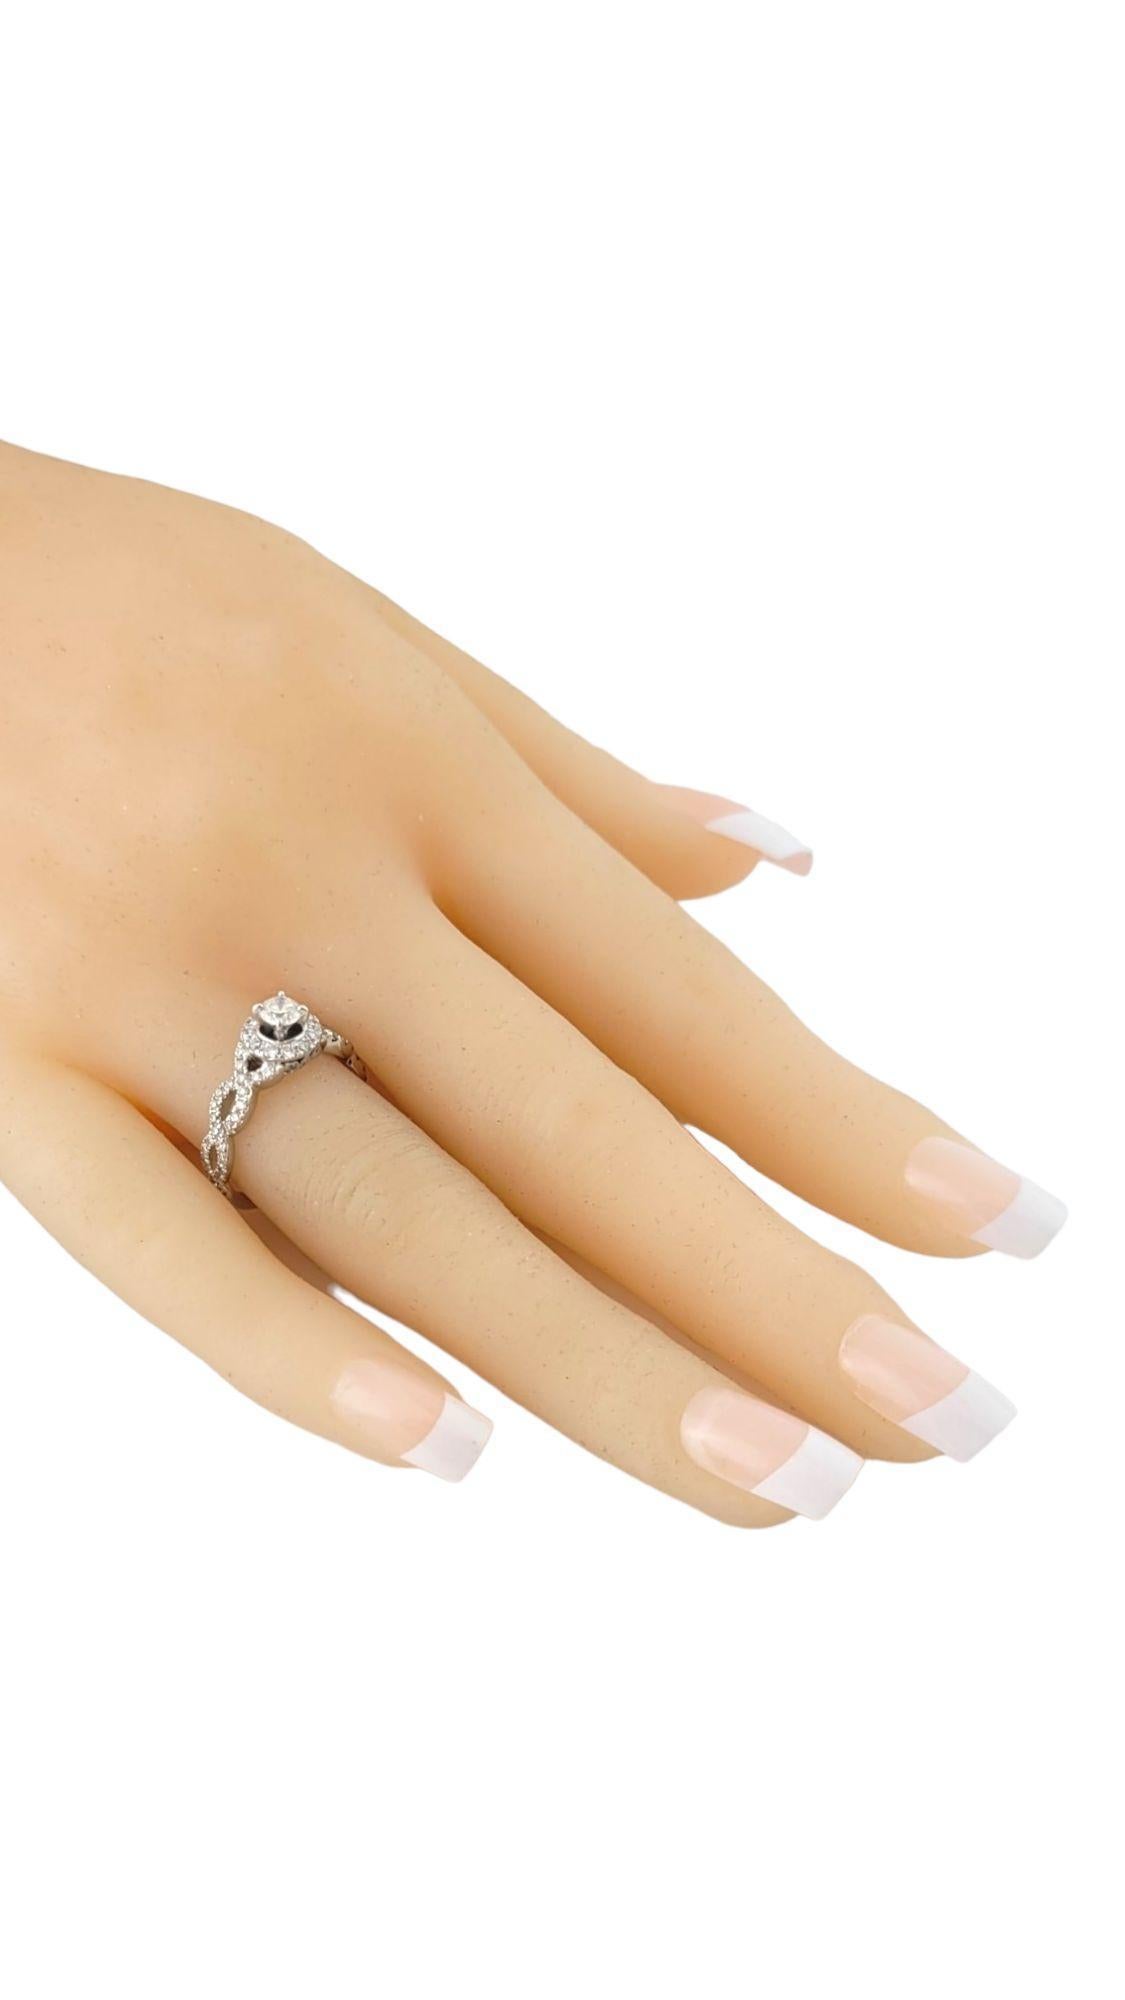 Neil Lane 14K White Gold Diamond Halo Ring Size 7.25 #14991 For Sale 1